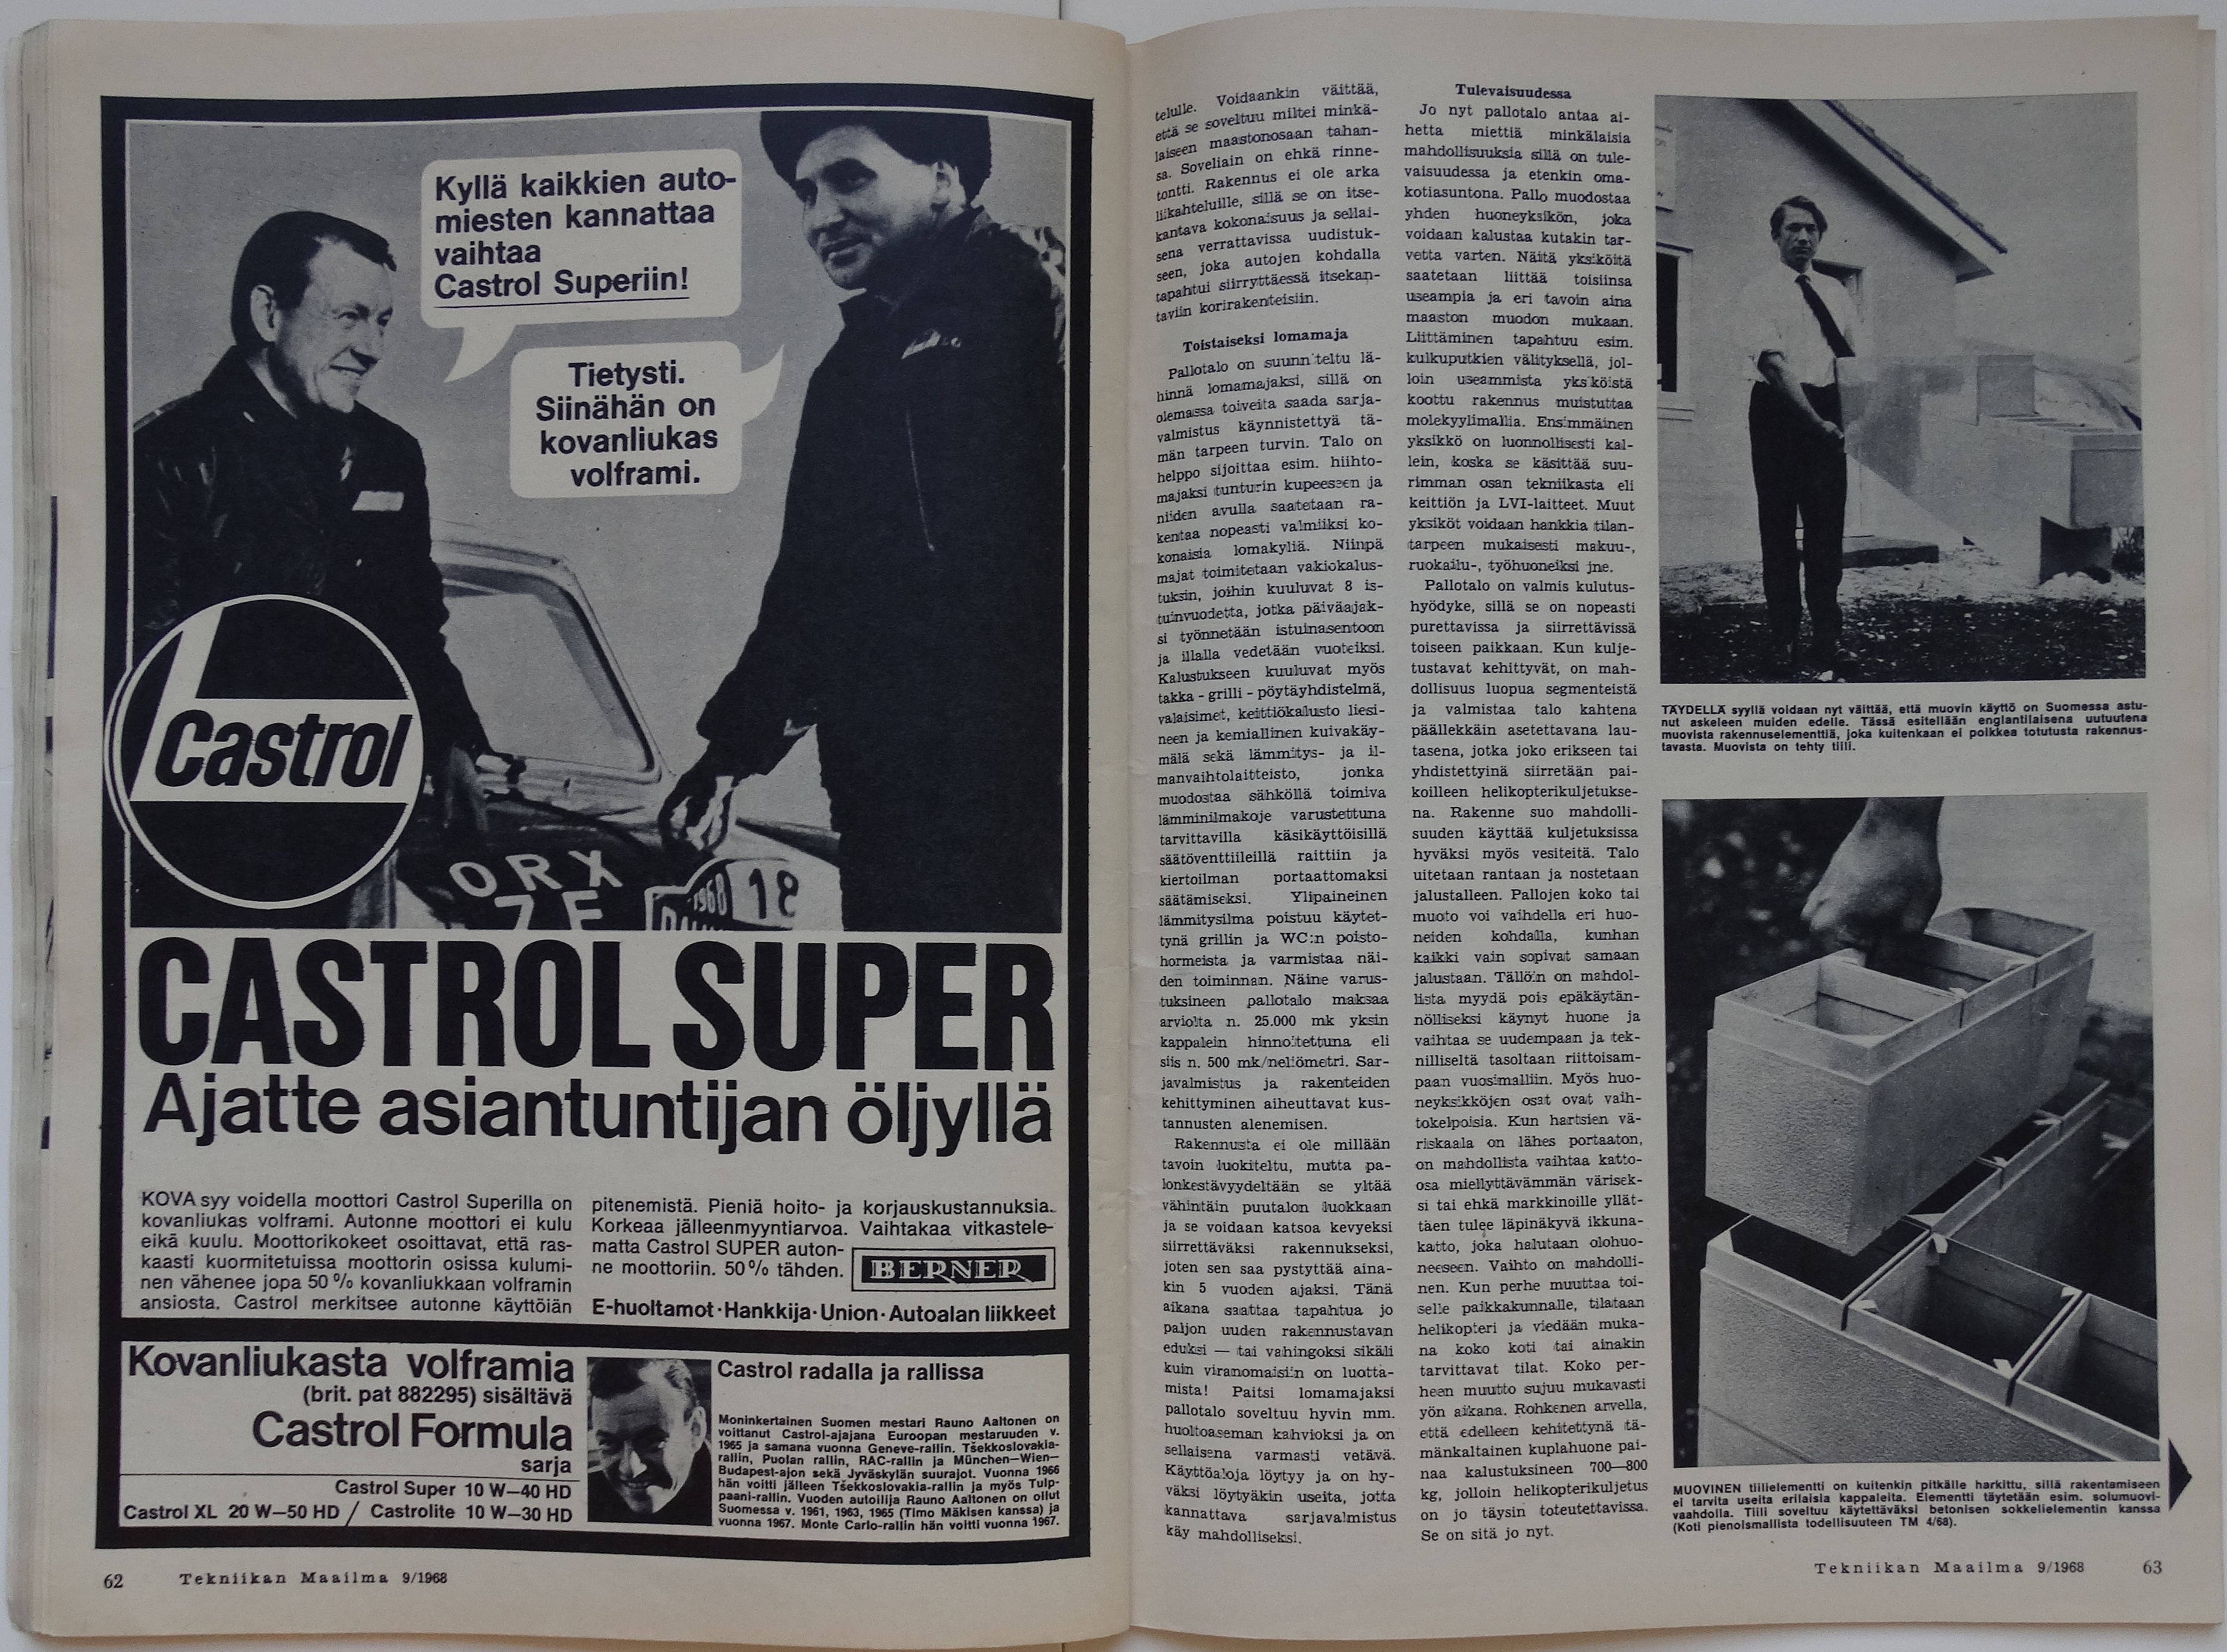 Tekniikan Maailma September 1968 | Pages 62-63